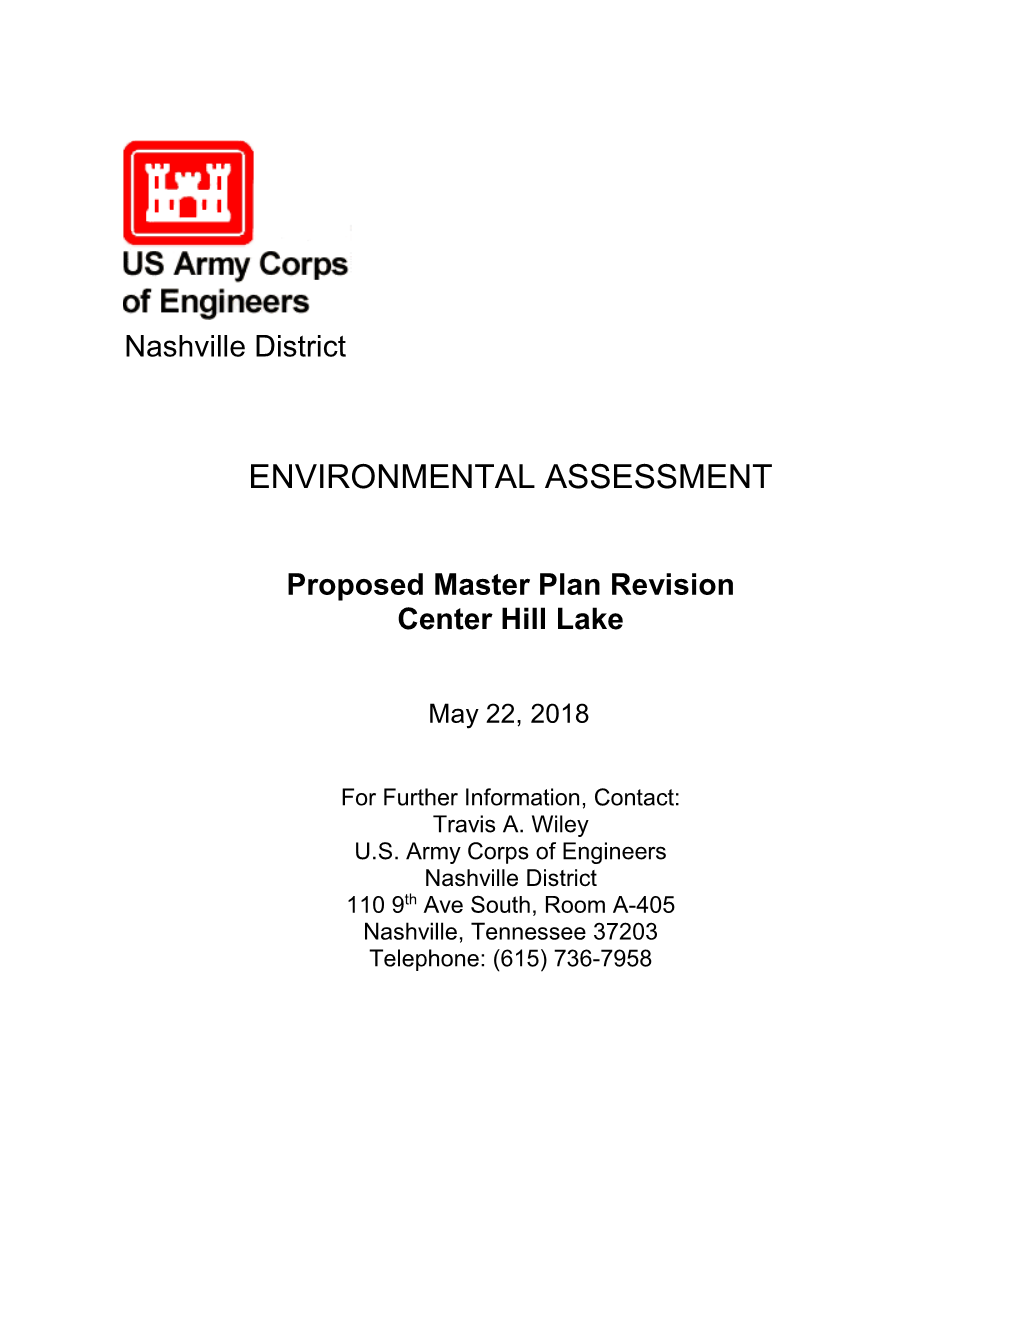 Environmental Assessment for Proposed Center Hill Master Plan